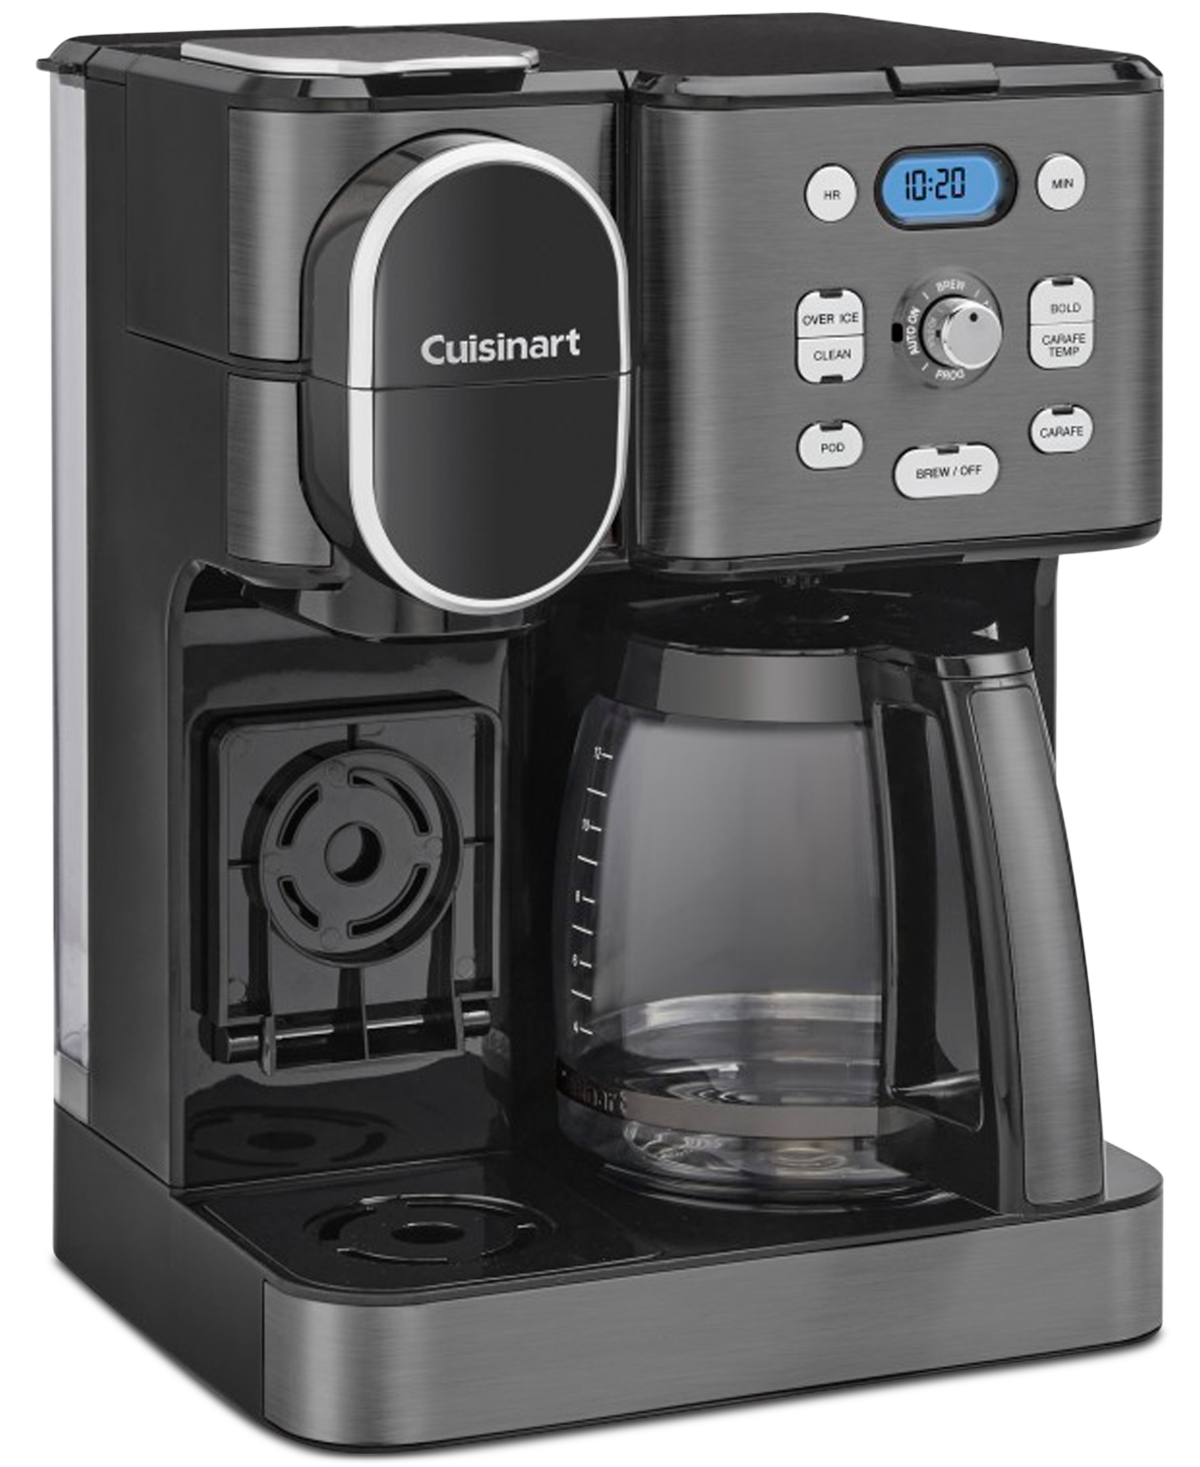 Cuisinart Coffee Center 2-in-1 12-cup Drip Coffeemaker In Black